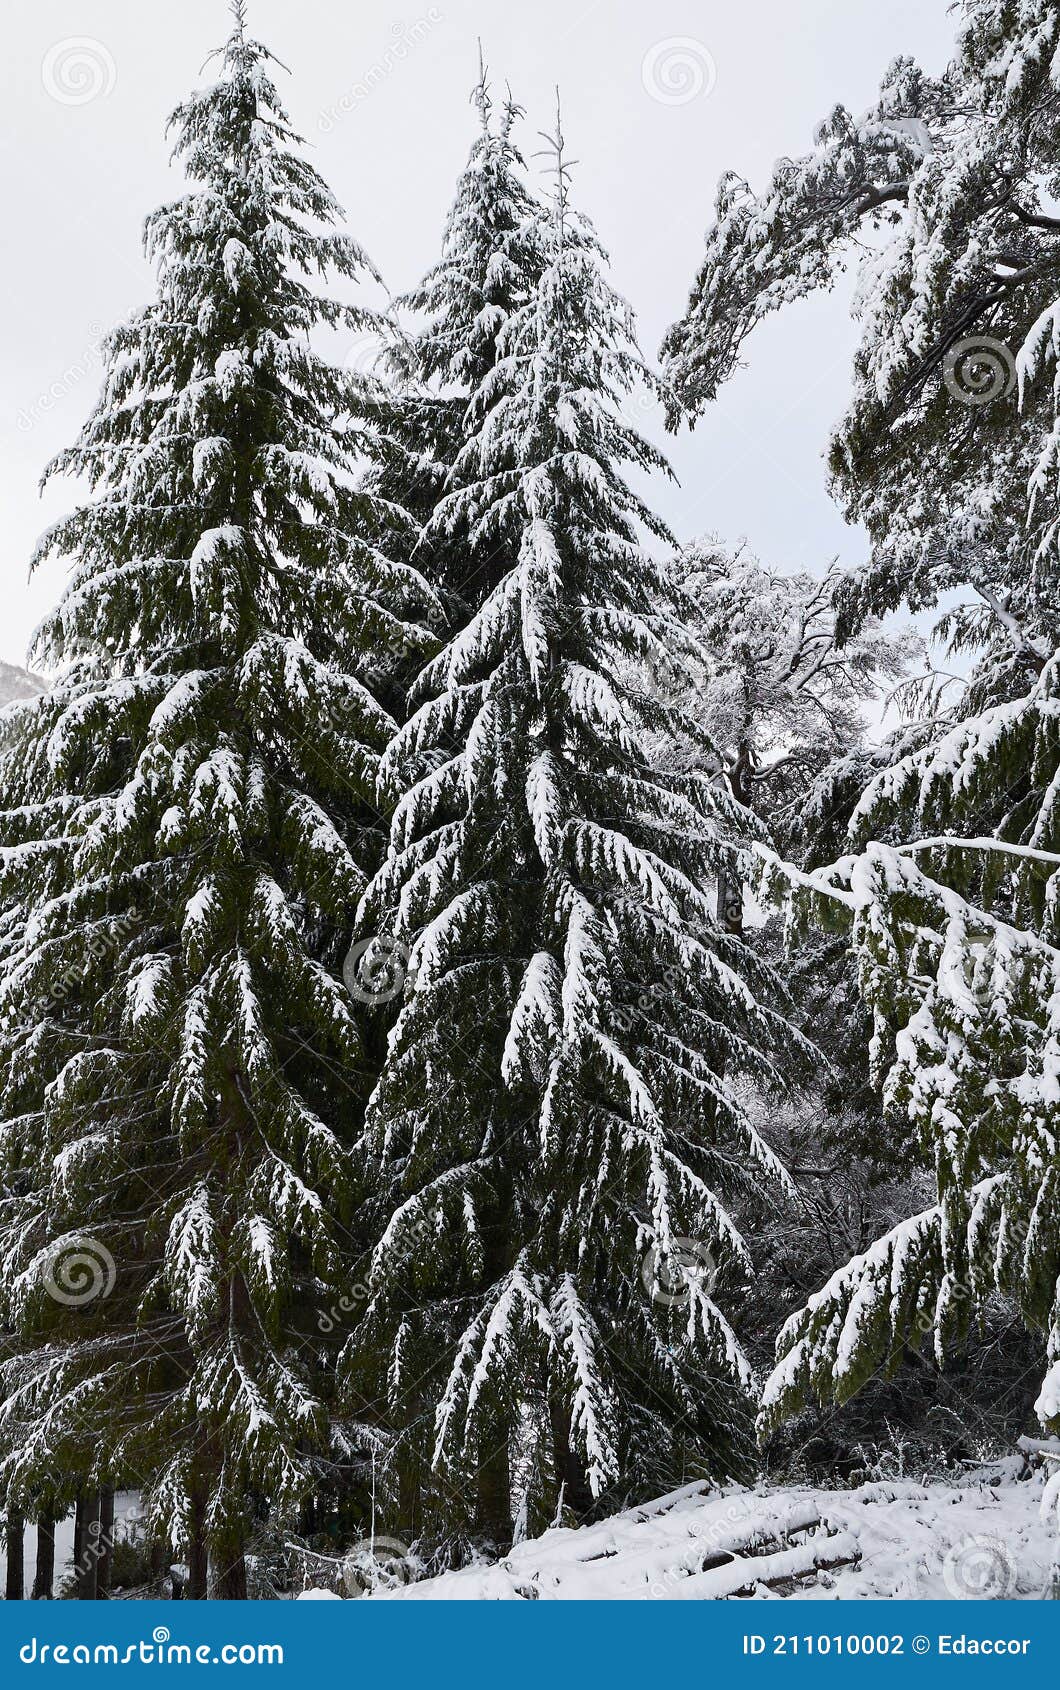 some big snowy pine trees on the snow, nature shot at cerro bayo bayo hill, villa la angostura, neuquen province, patagonia